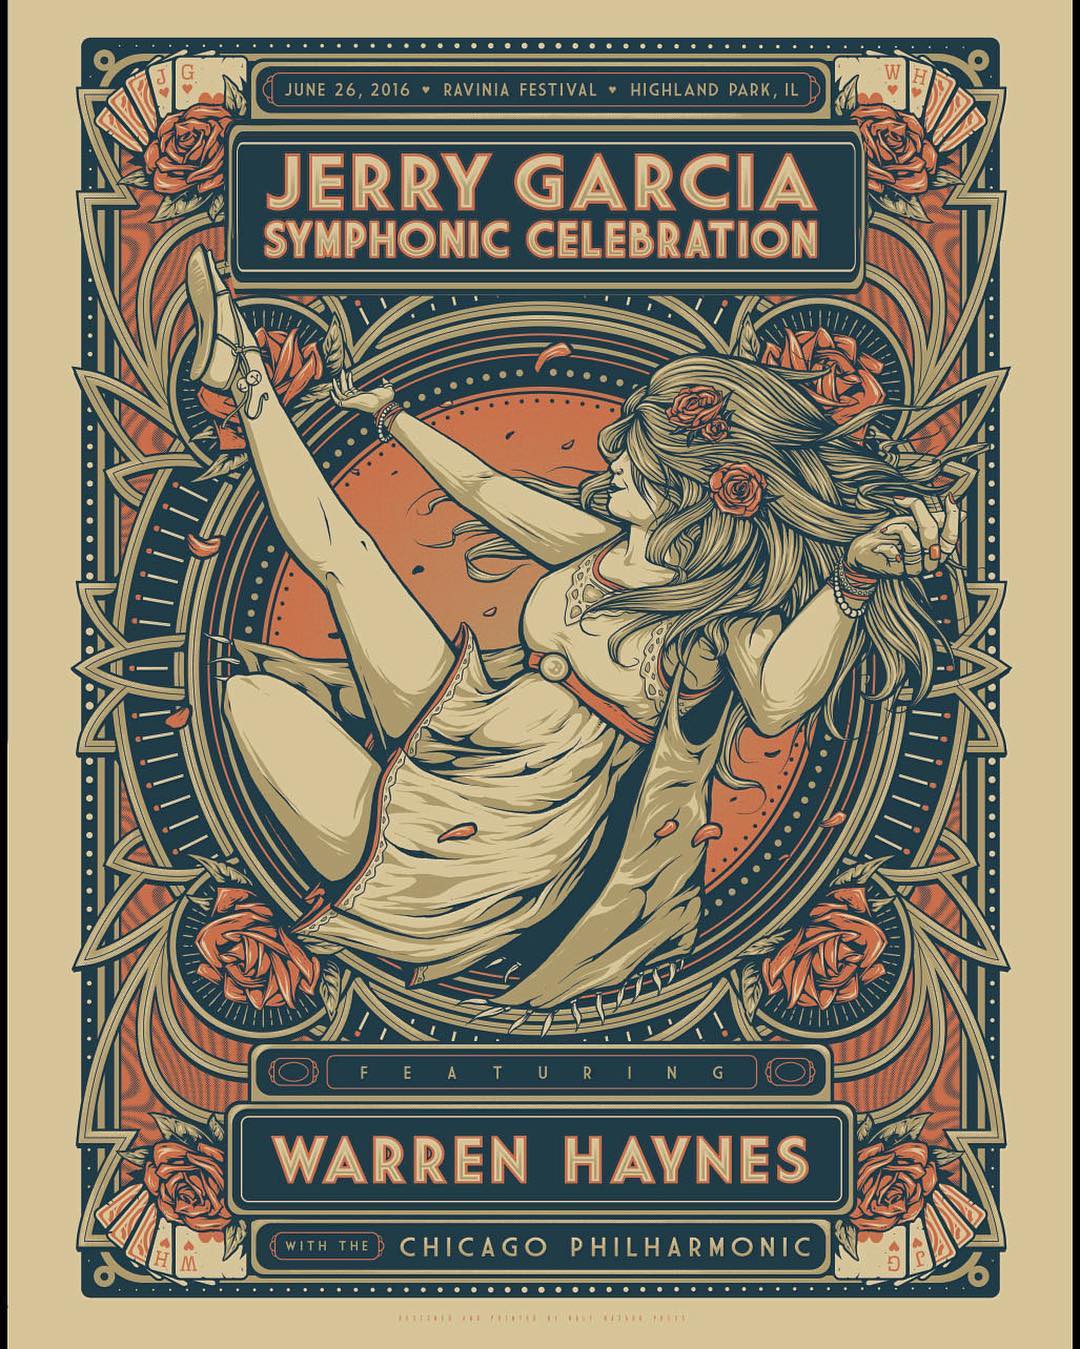 Setlist / Video | Jerry Garcia Symphonic Celebration with Warren Haynes @ Ravinia 6/26/16